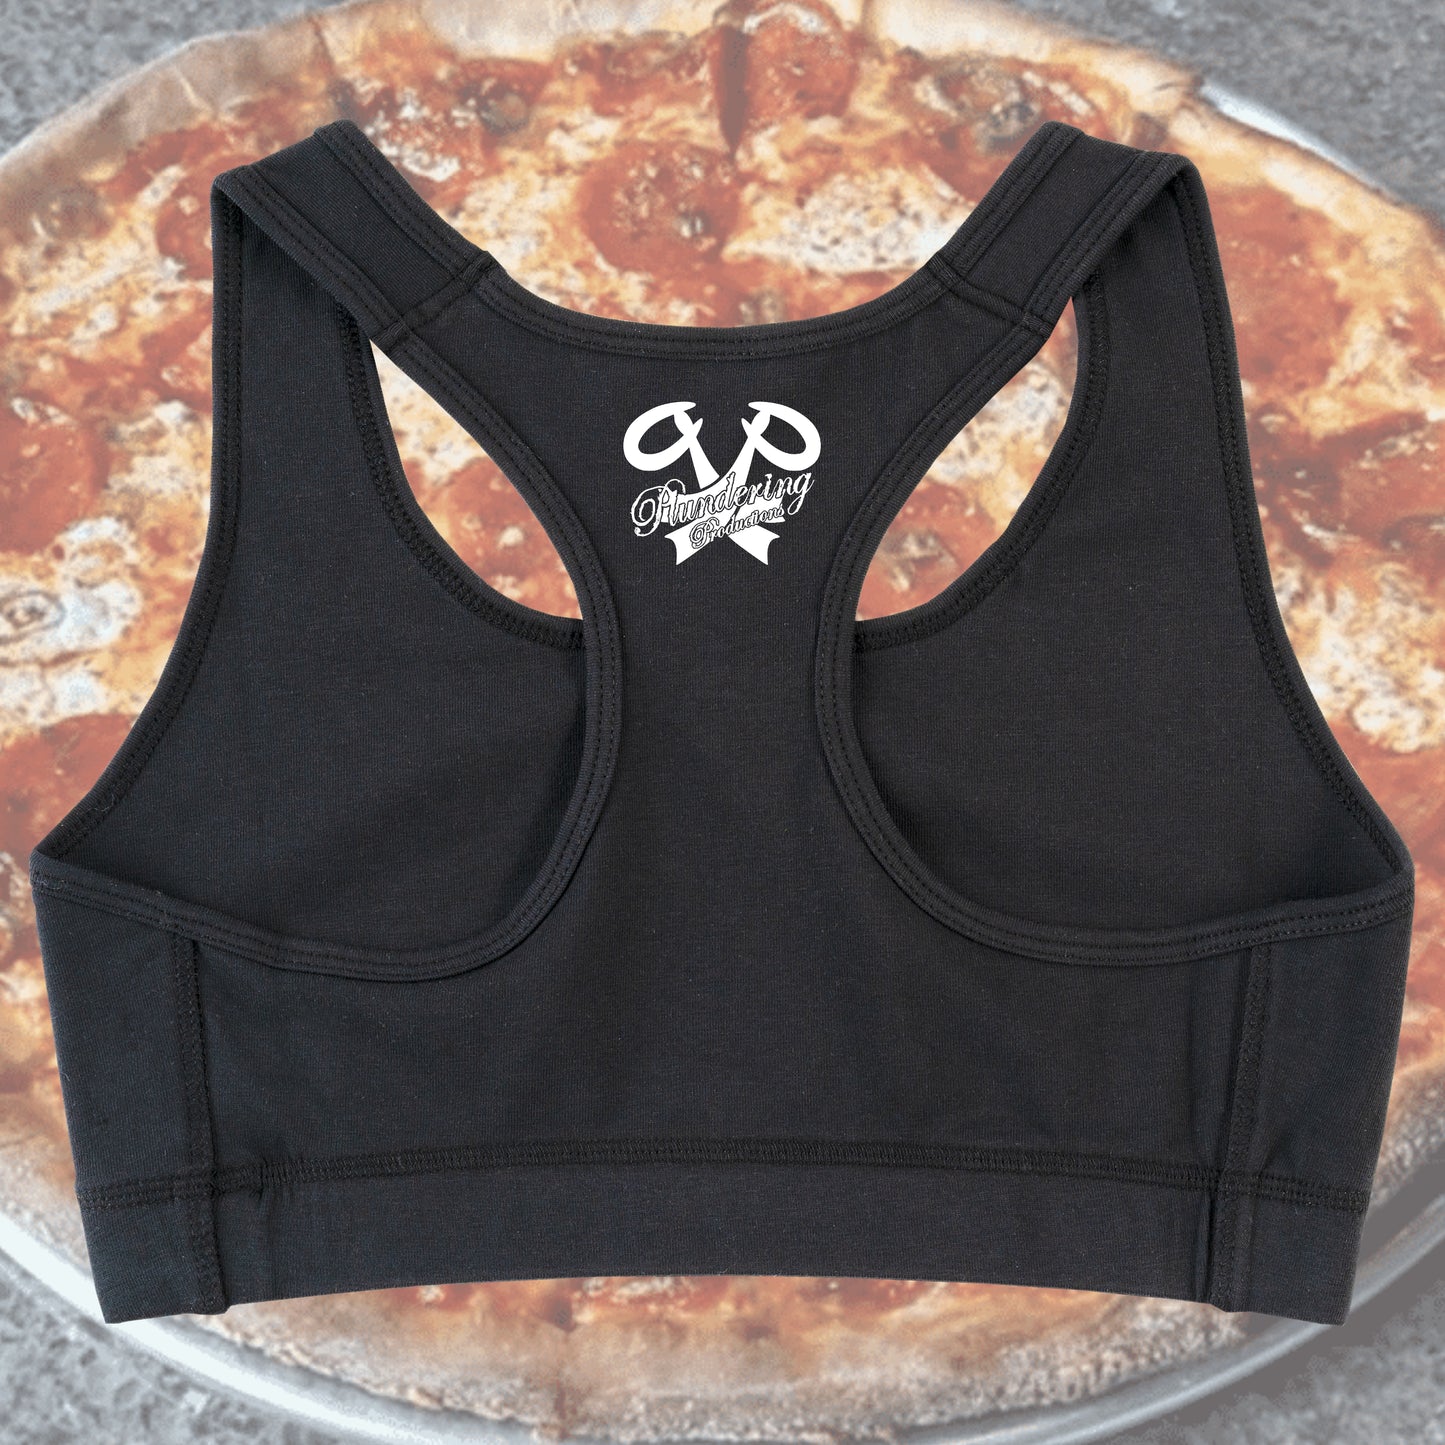 Women's Running For Pizza Active Bra Vest